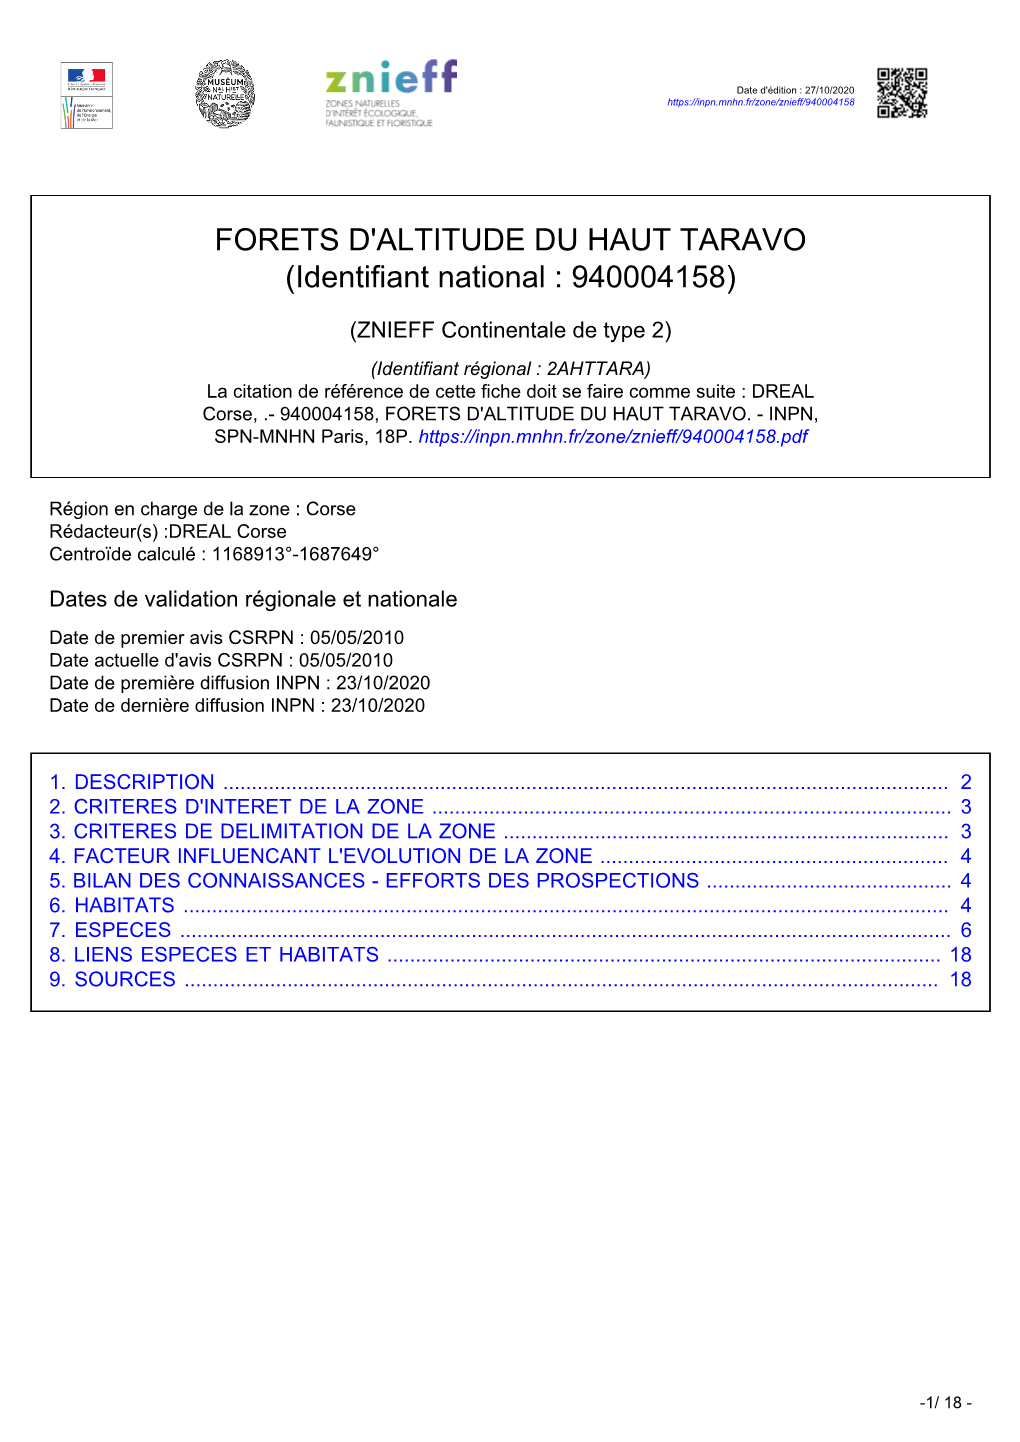 FORETS D'altitude DU HAUT TARAVO (Identifiant National : 940004158)